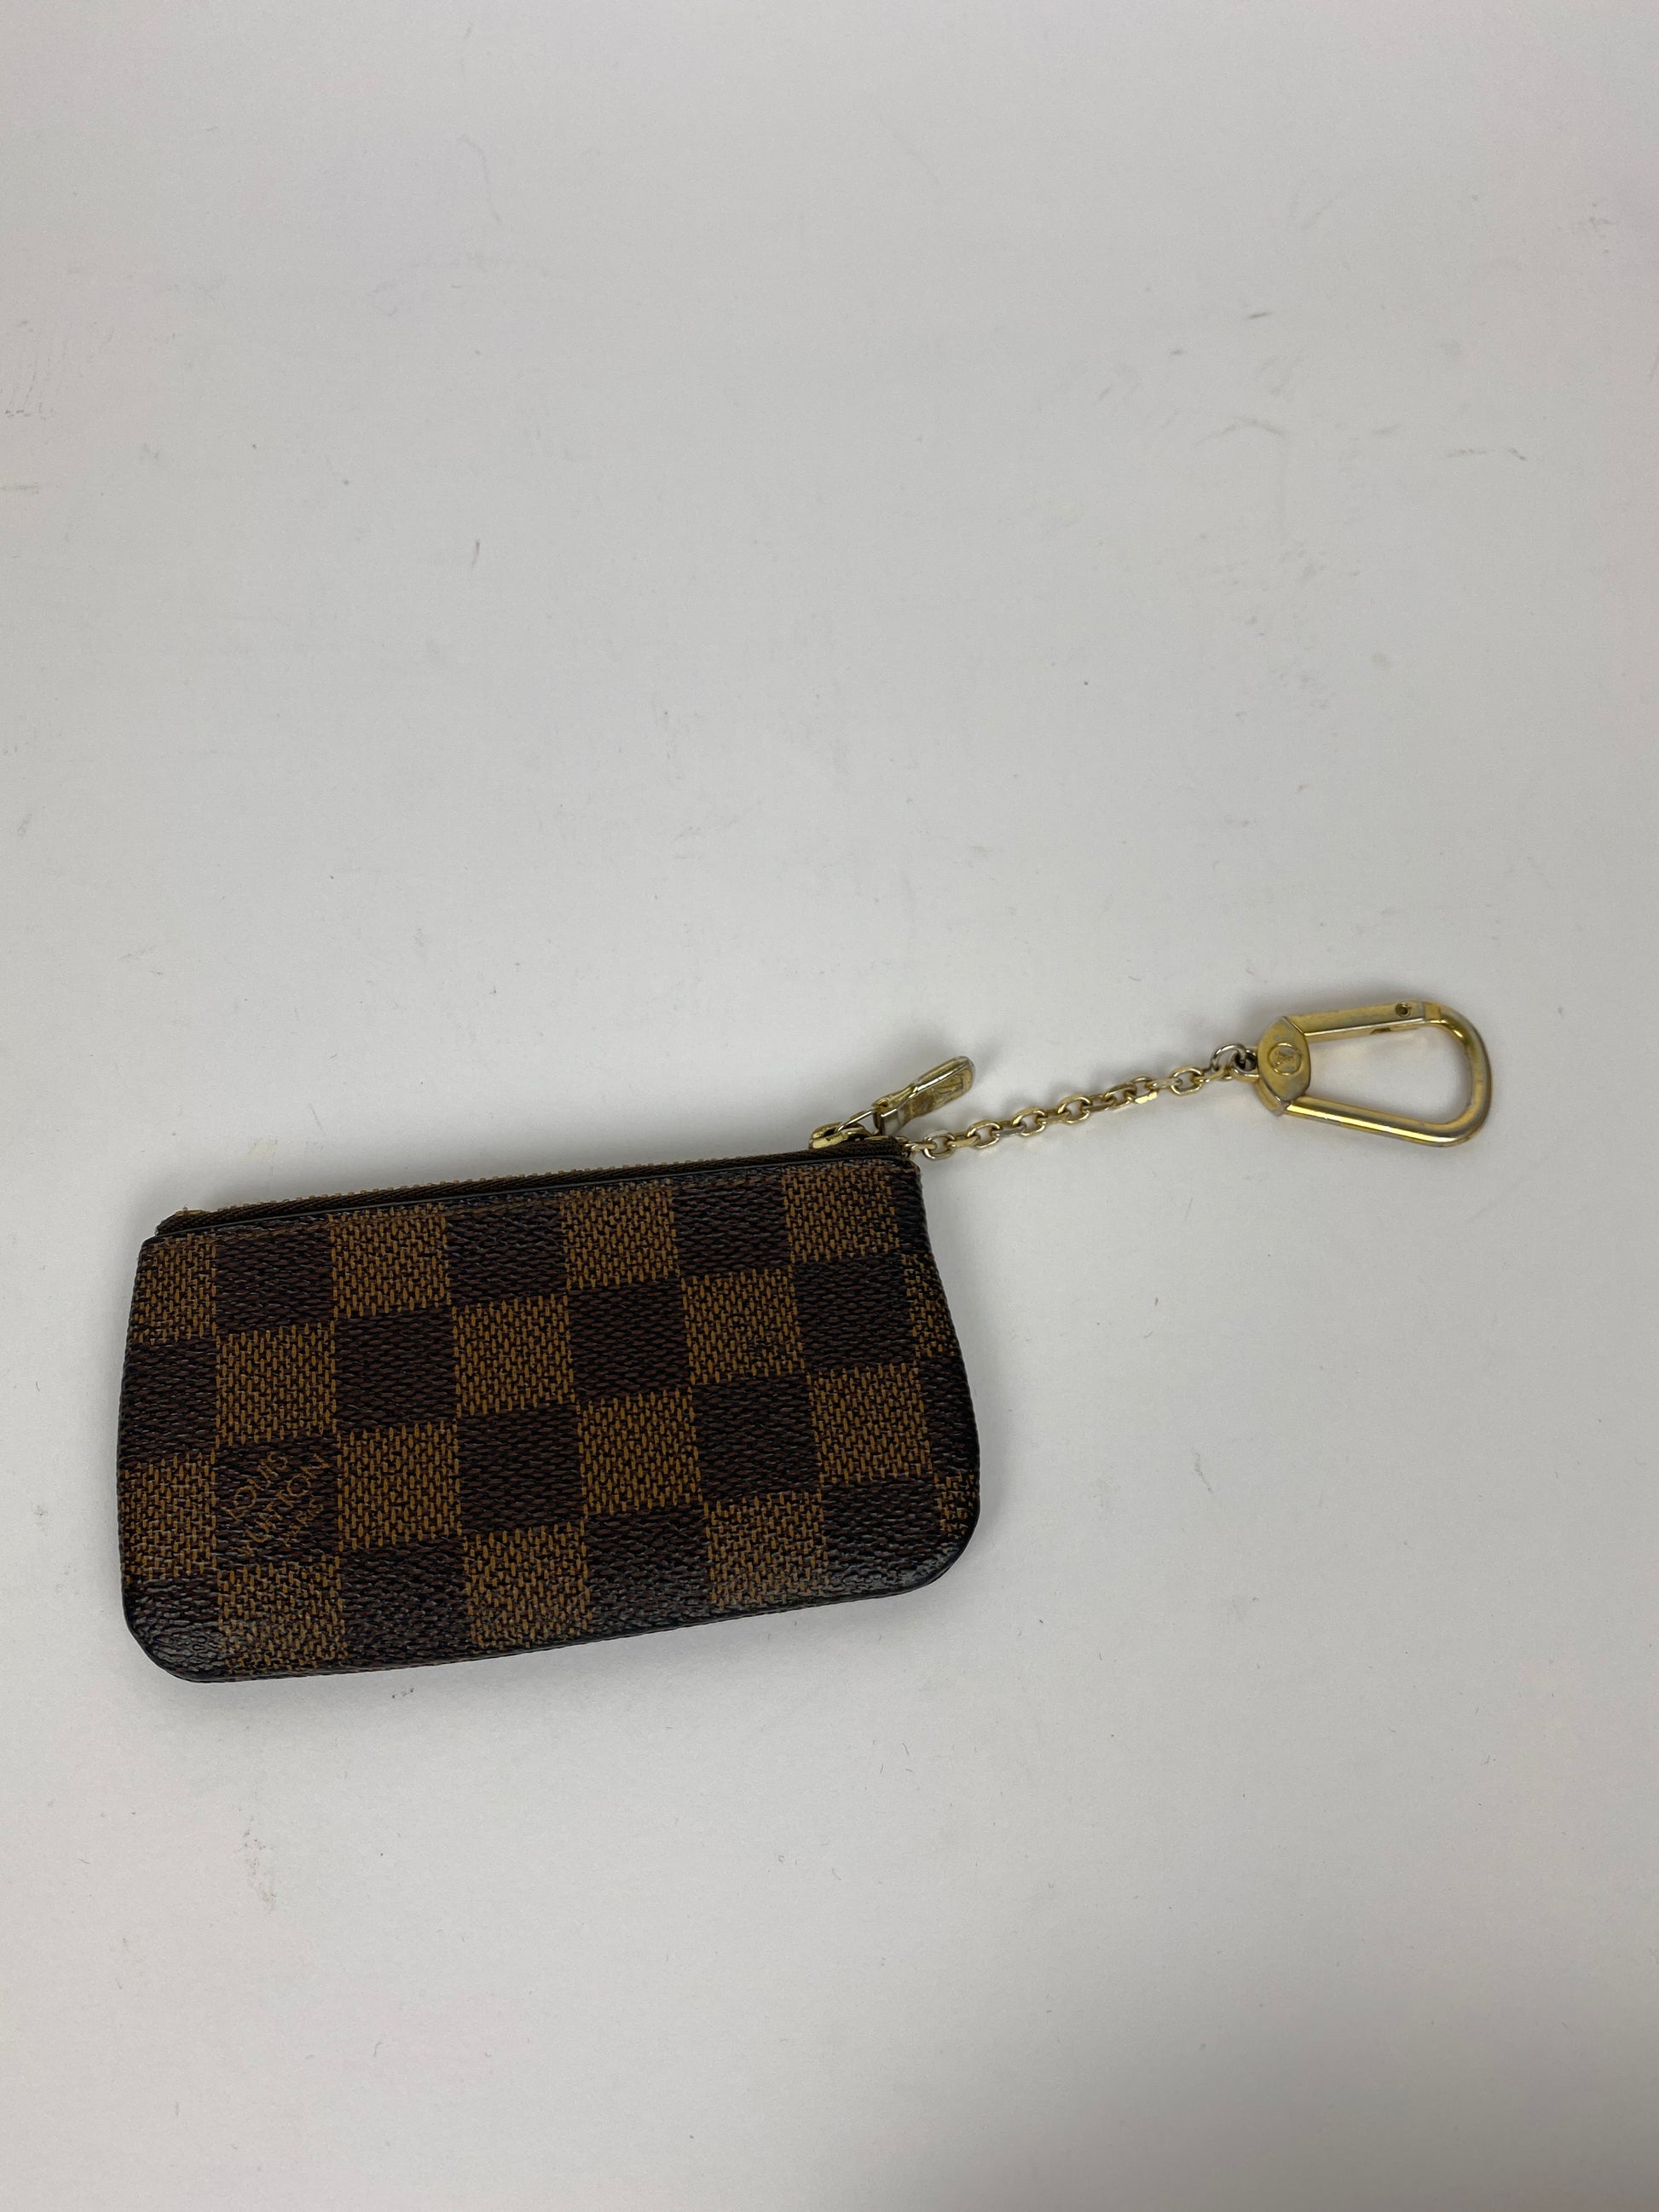 Louis Vuitton key pouch direct kopen